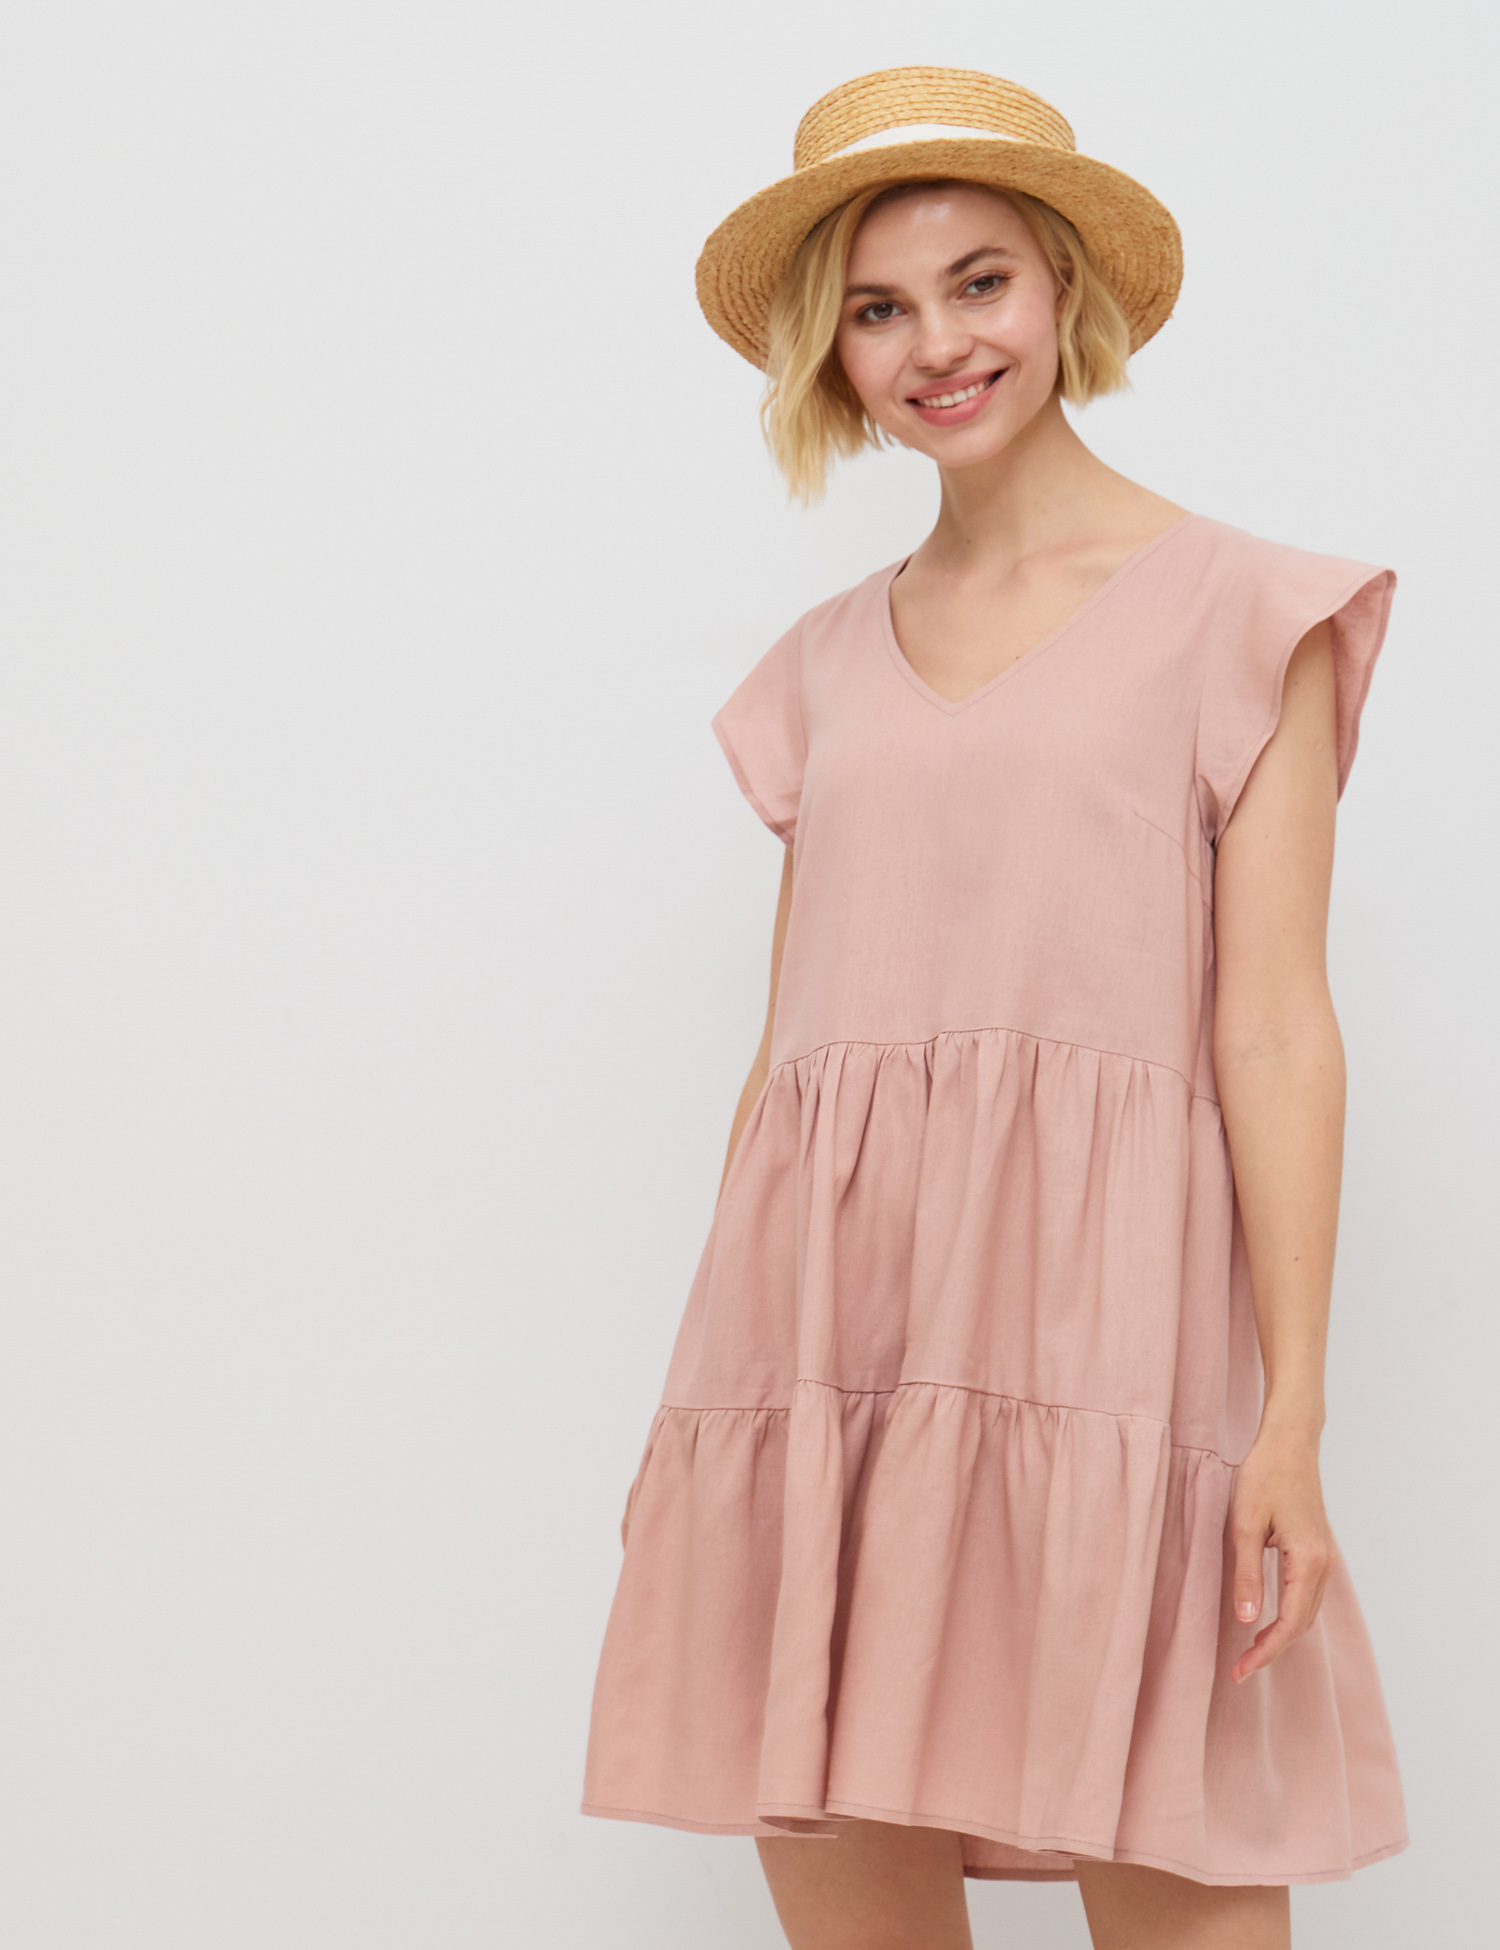 Картинка Рожева лляна сукня